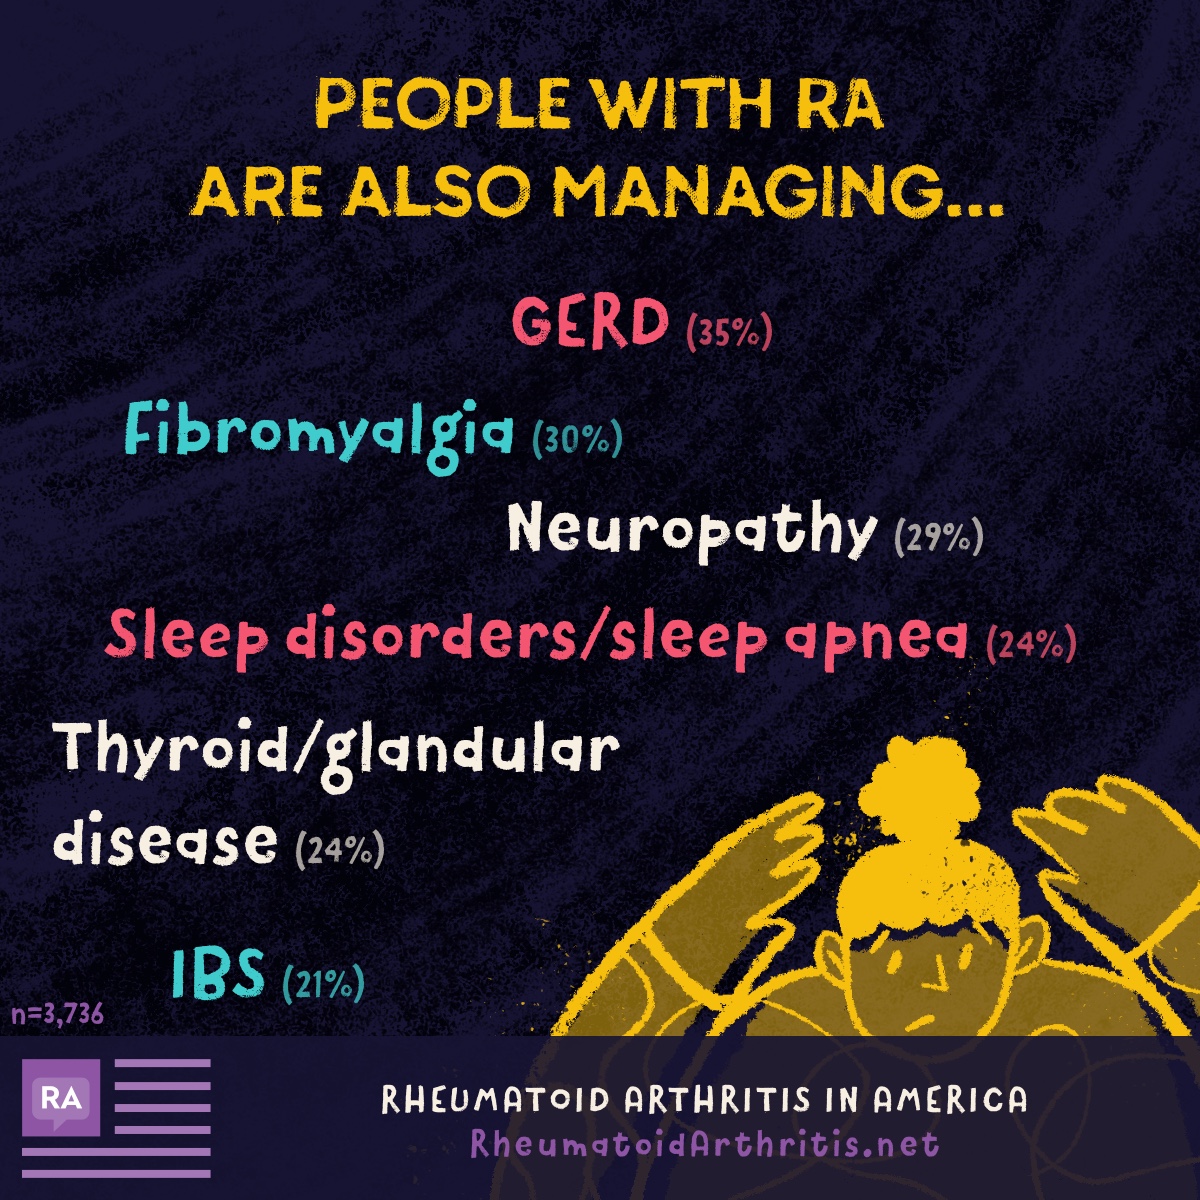 A list of the top 6 comorbidities of RA including GERD, fibromialgia, Neuropathy, Sleep Disorders, Thyroid disease, and IBS